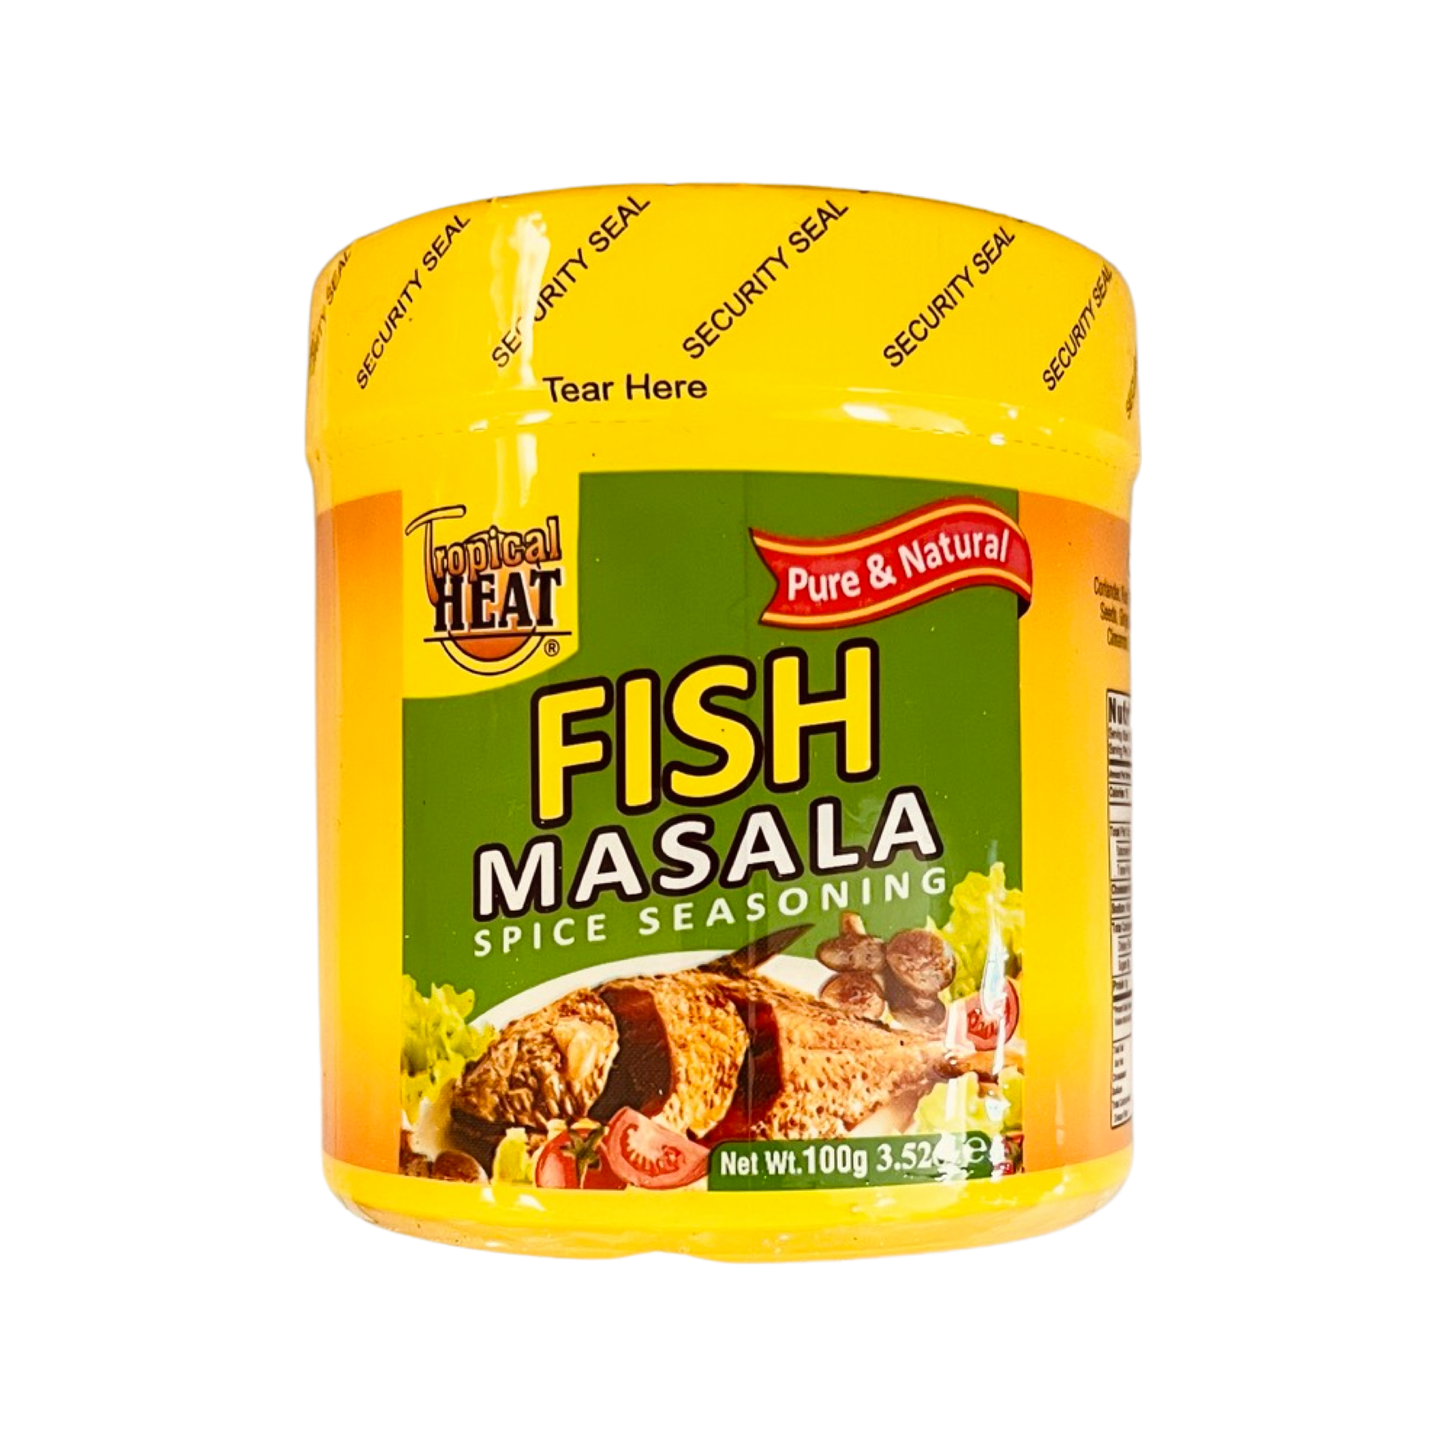 Fish Masala